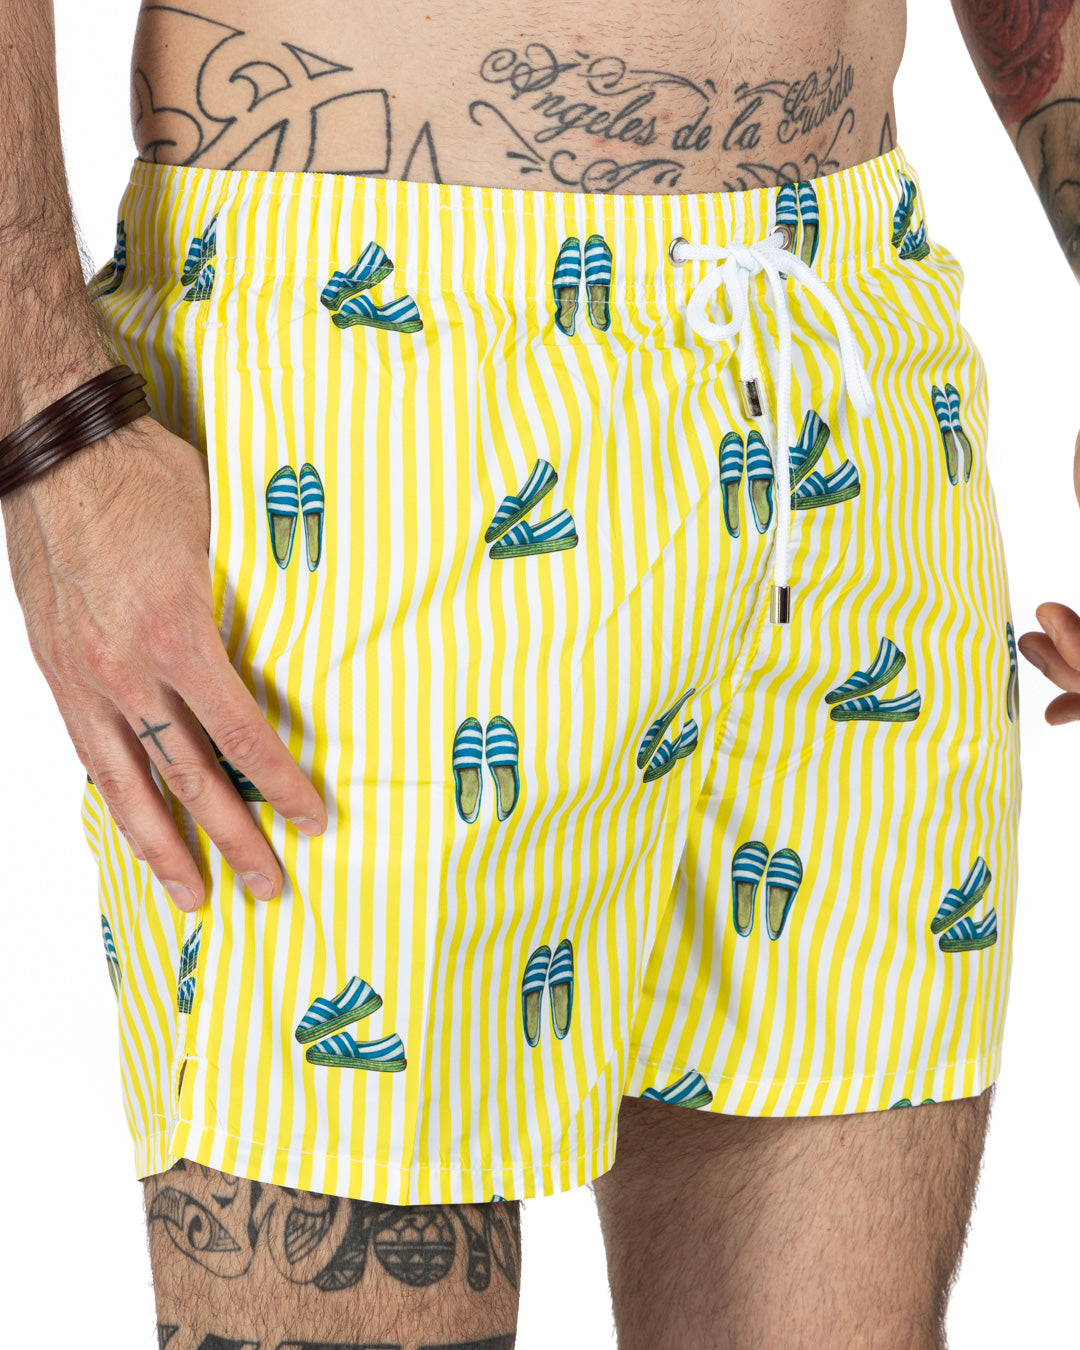 Swimsuit - Yellow striped espadrilles pattern